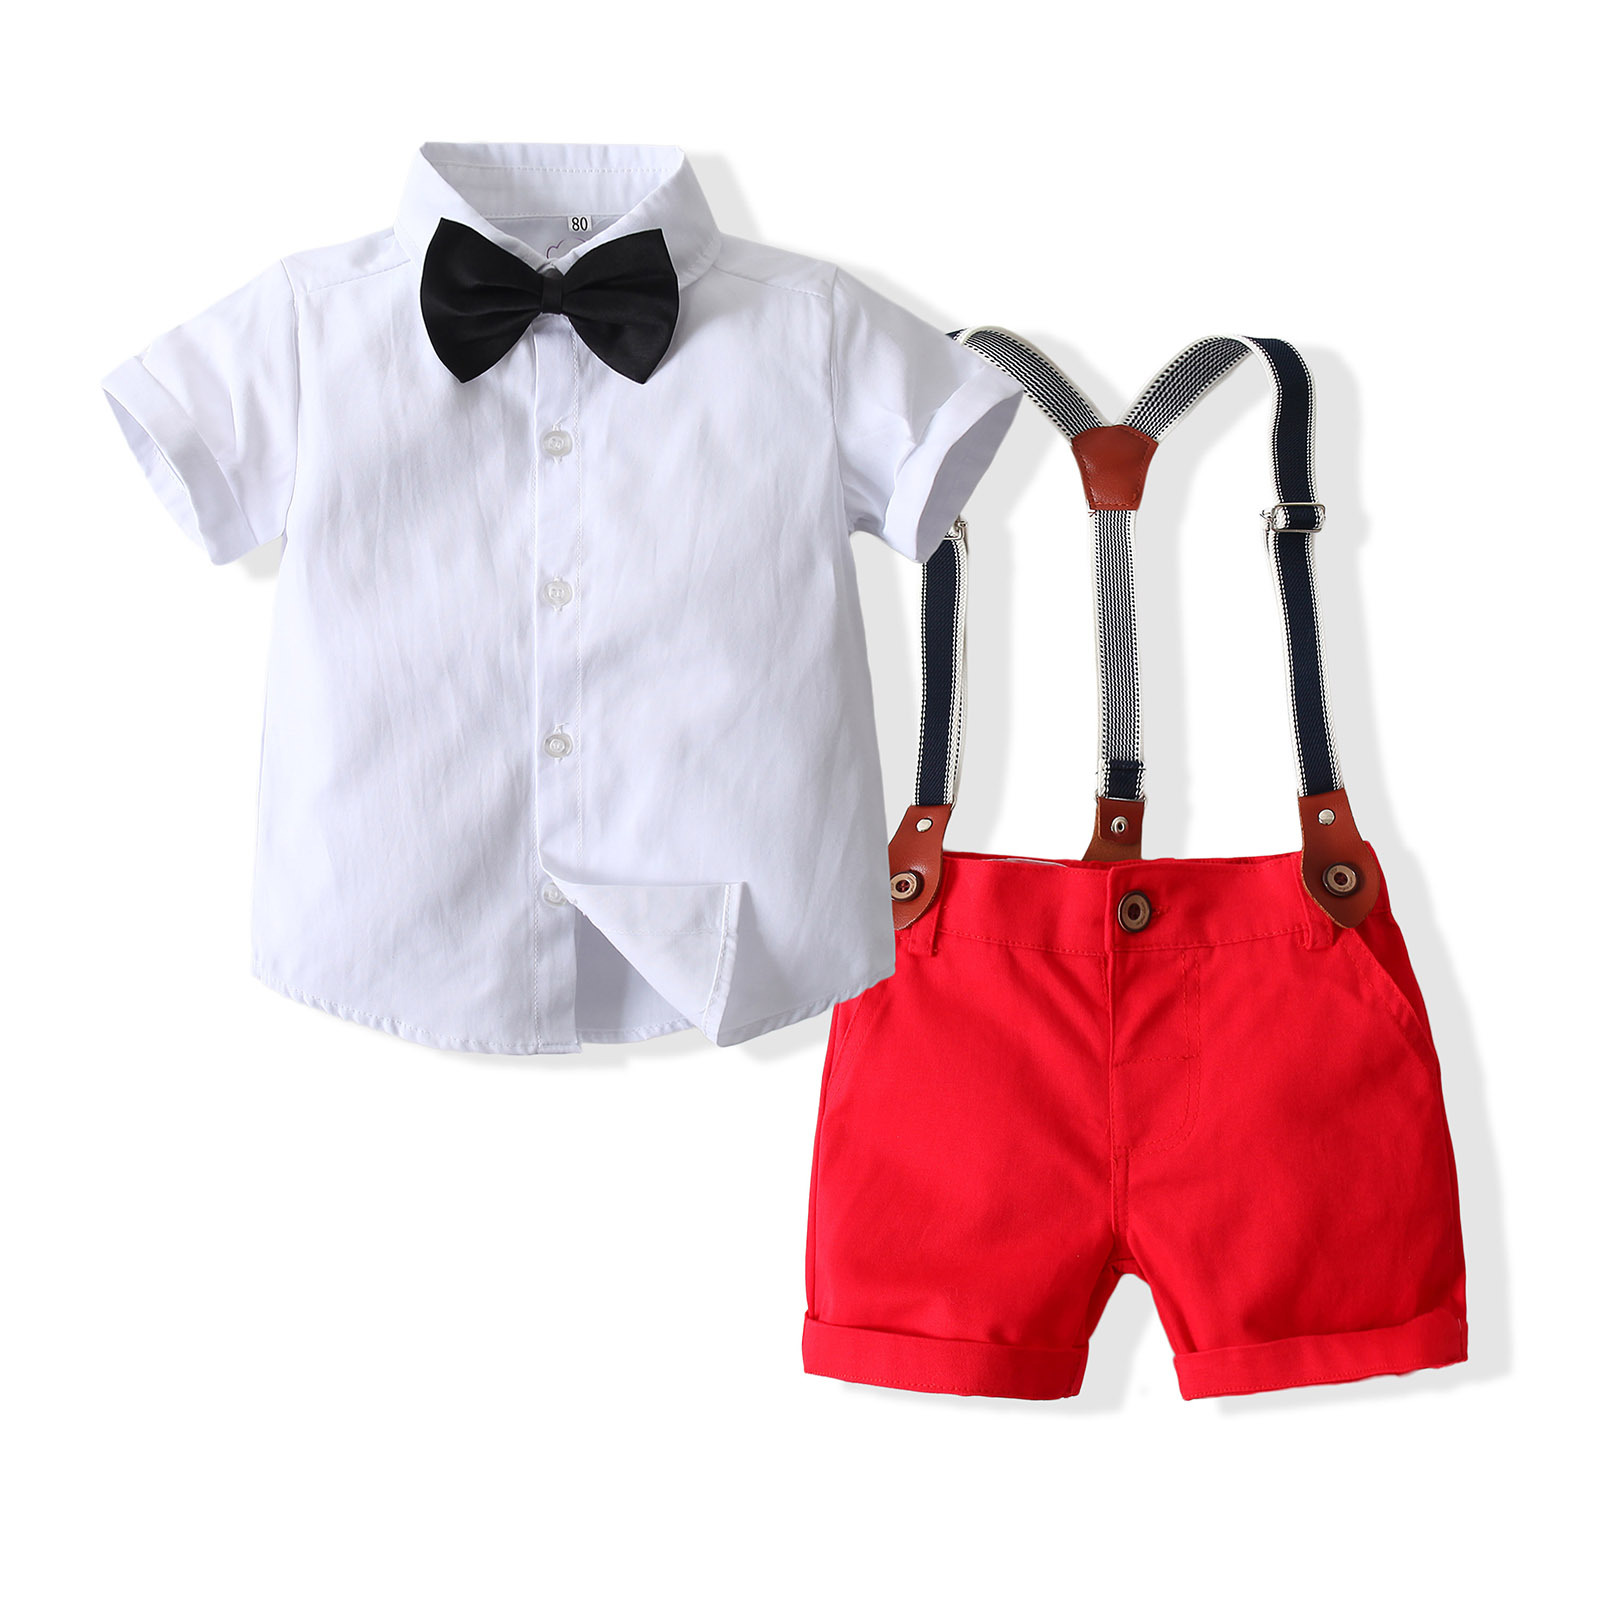 Children's Summer Clothes Suit Korean Boys Bib Shorts Short Sleeve Shirt Gentleman 2 Piece Suit